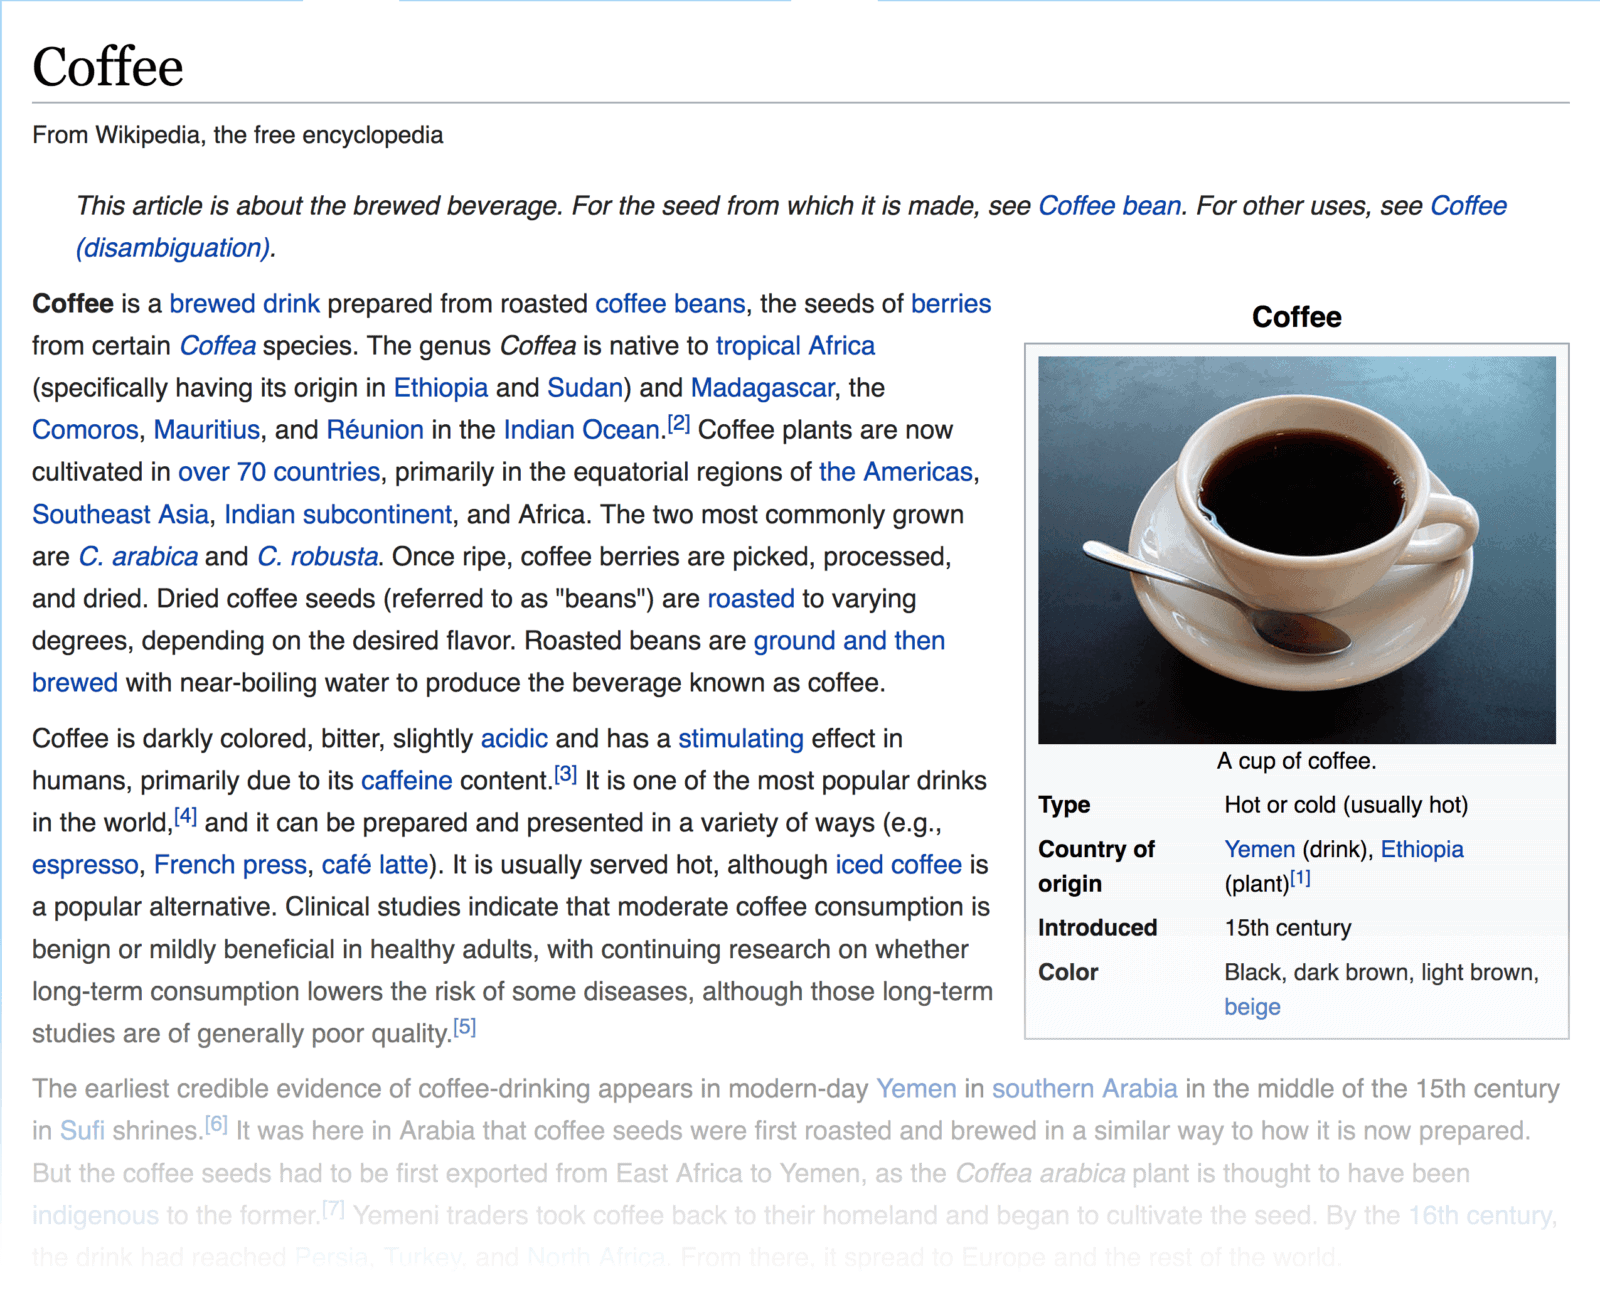 Wikipedia – "Coffee" page